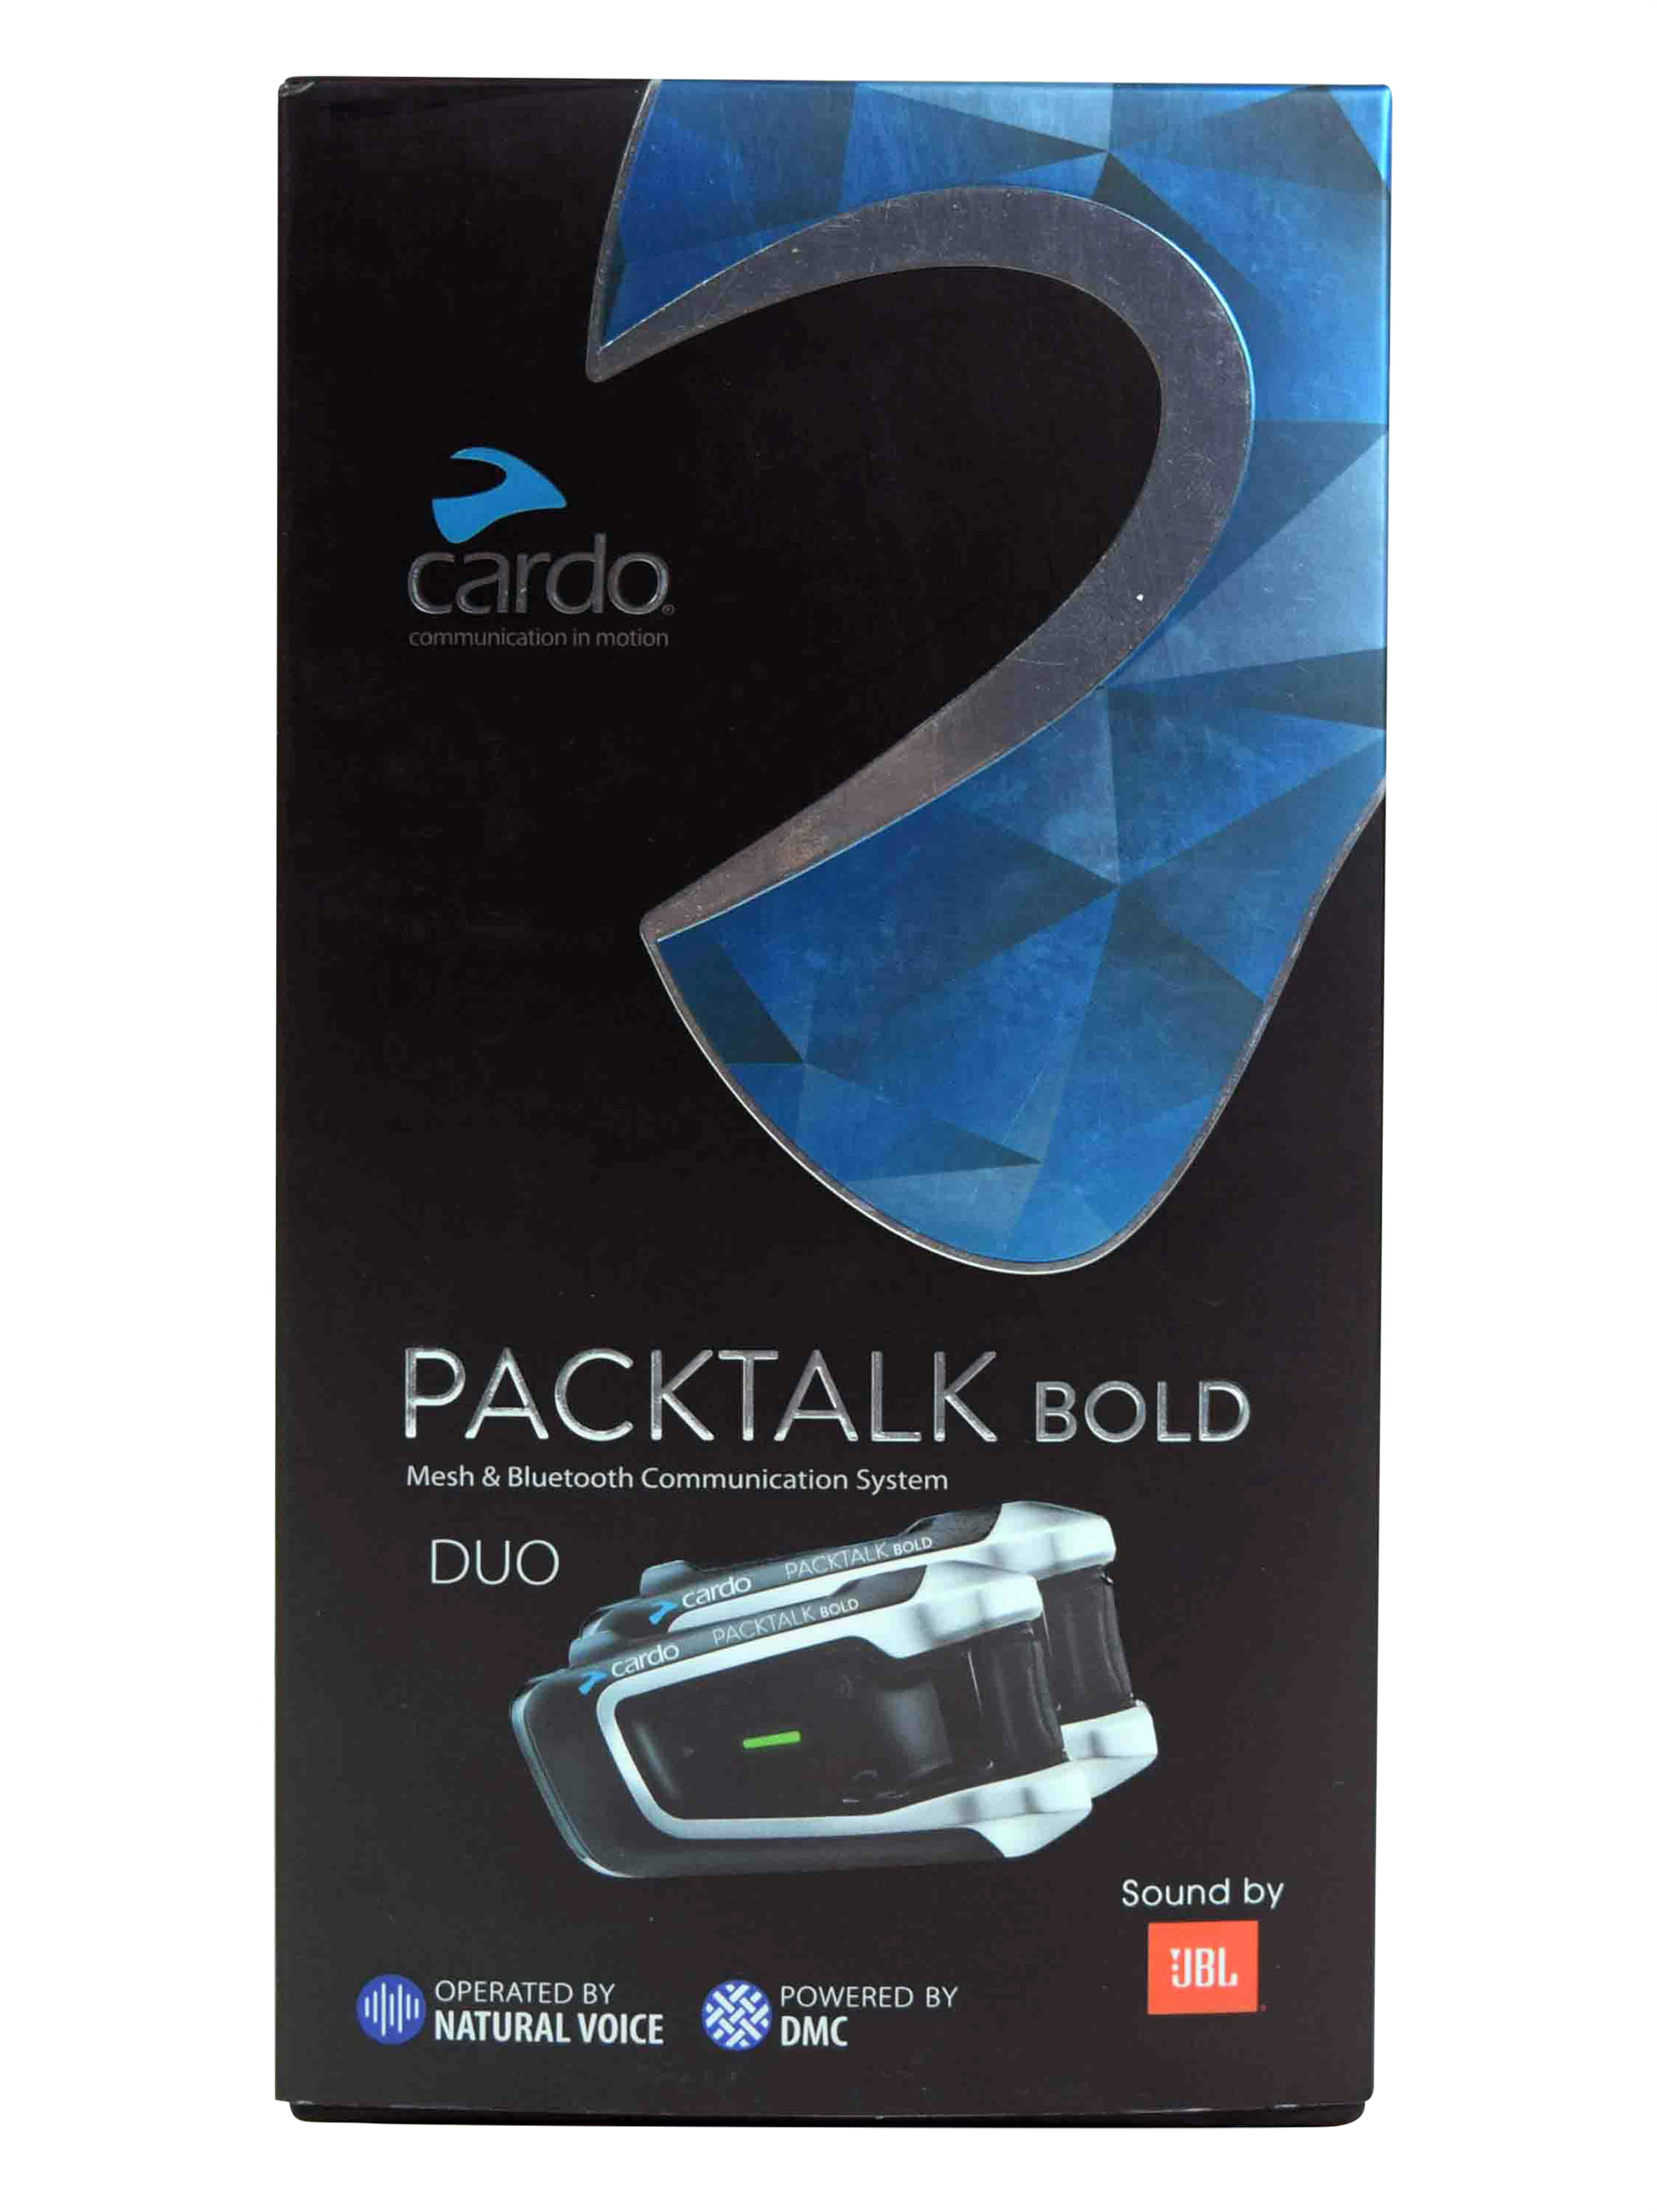 Cardo Packtalk Bold DUO Bluetooth Motorcycle Helmet Communication